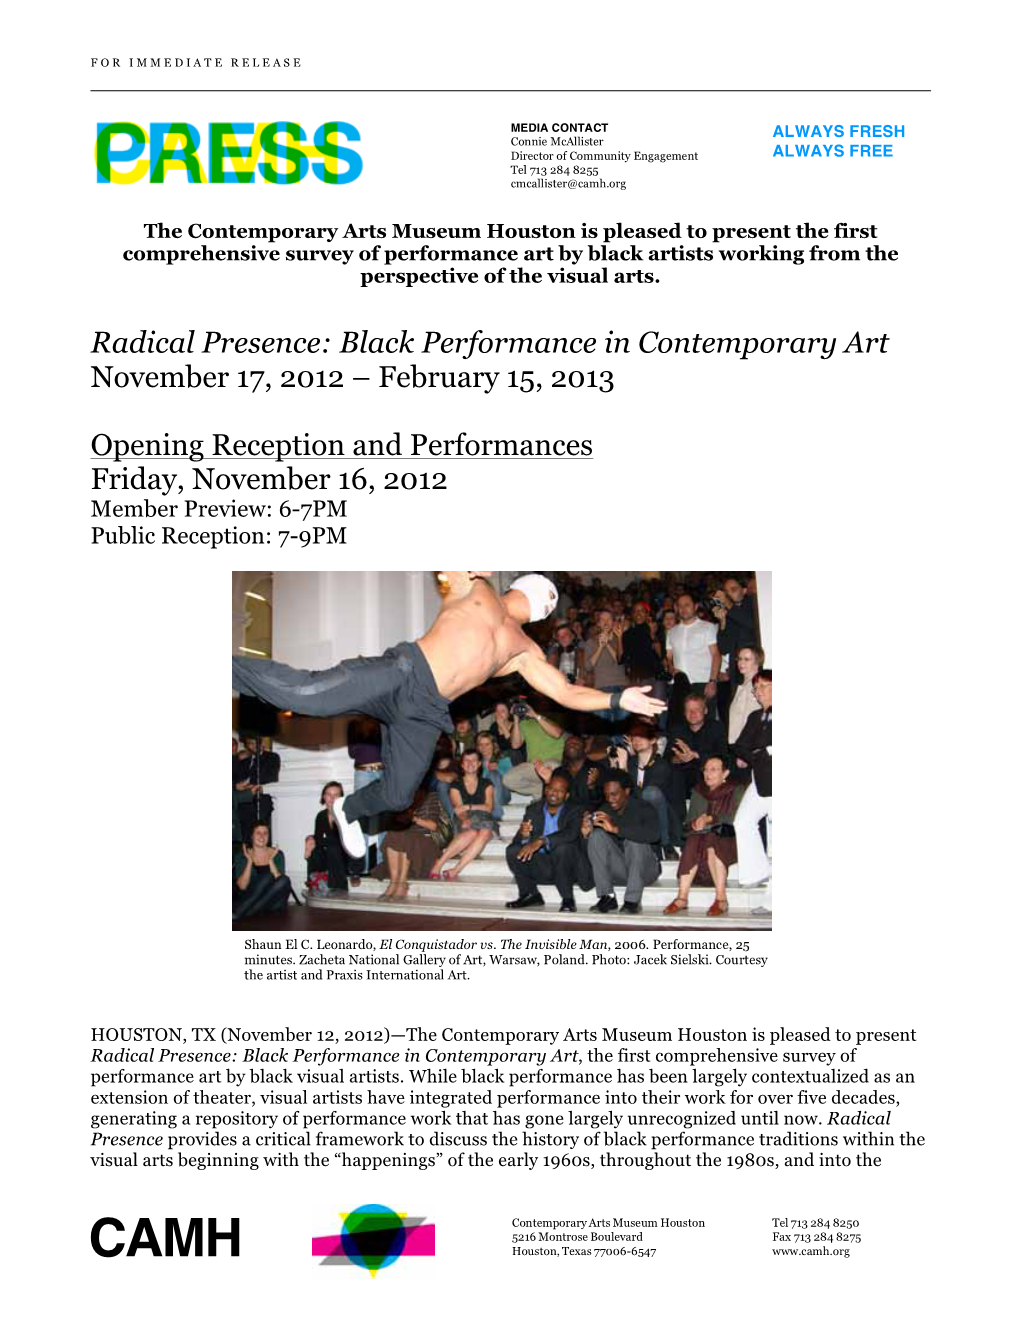 Radical Presence: Black Performance in Contemporary Art November 17, 2012 – February 15, 2013